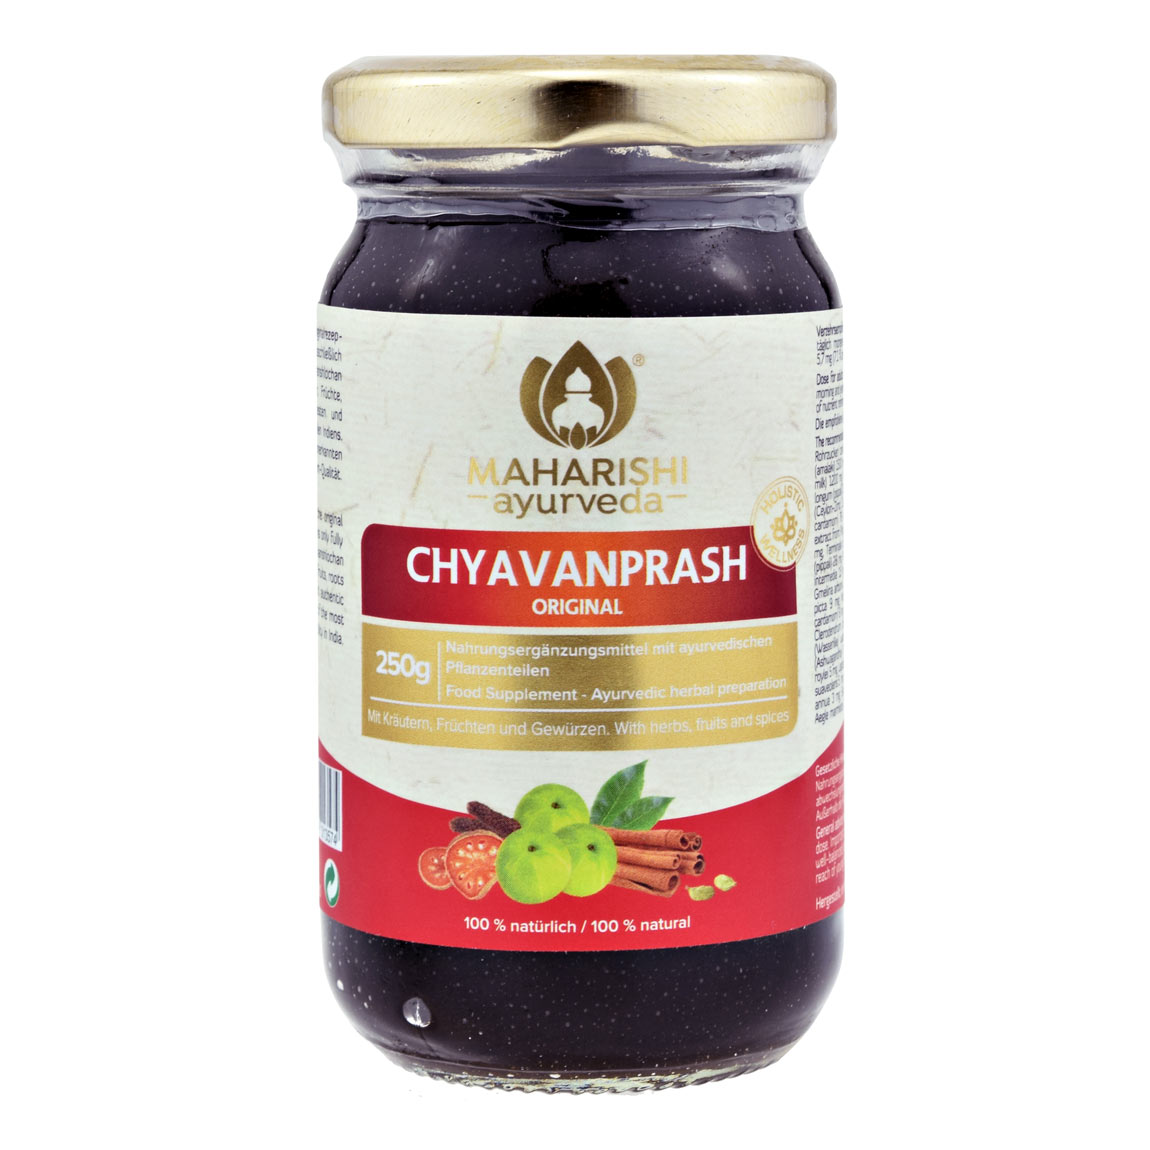 Chyvanaprash Original, Maharishi Ayurveda